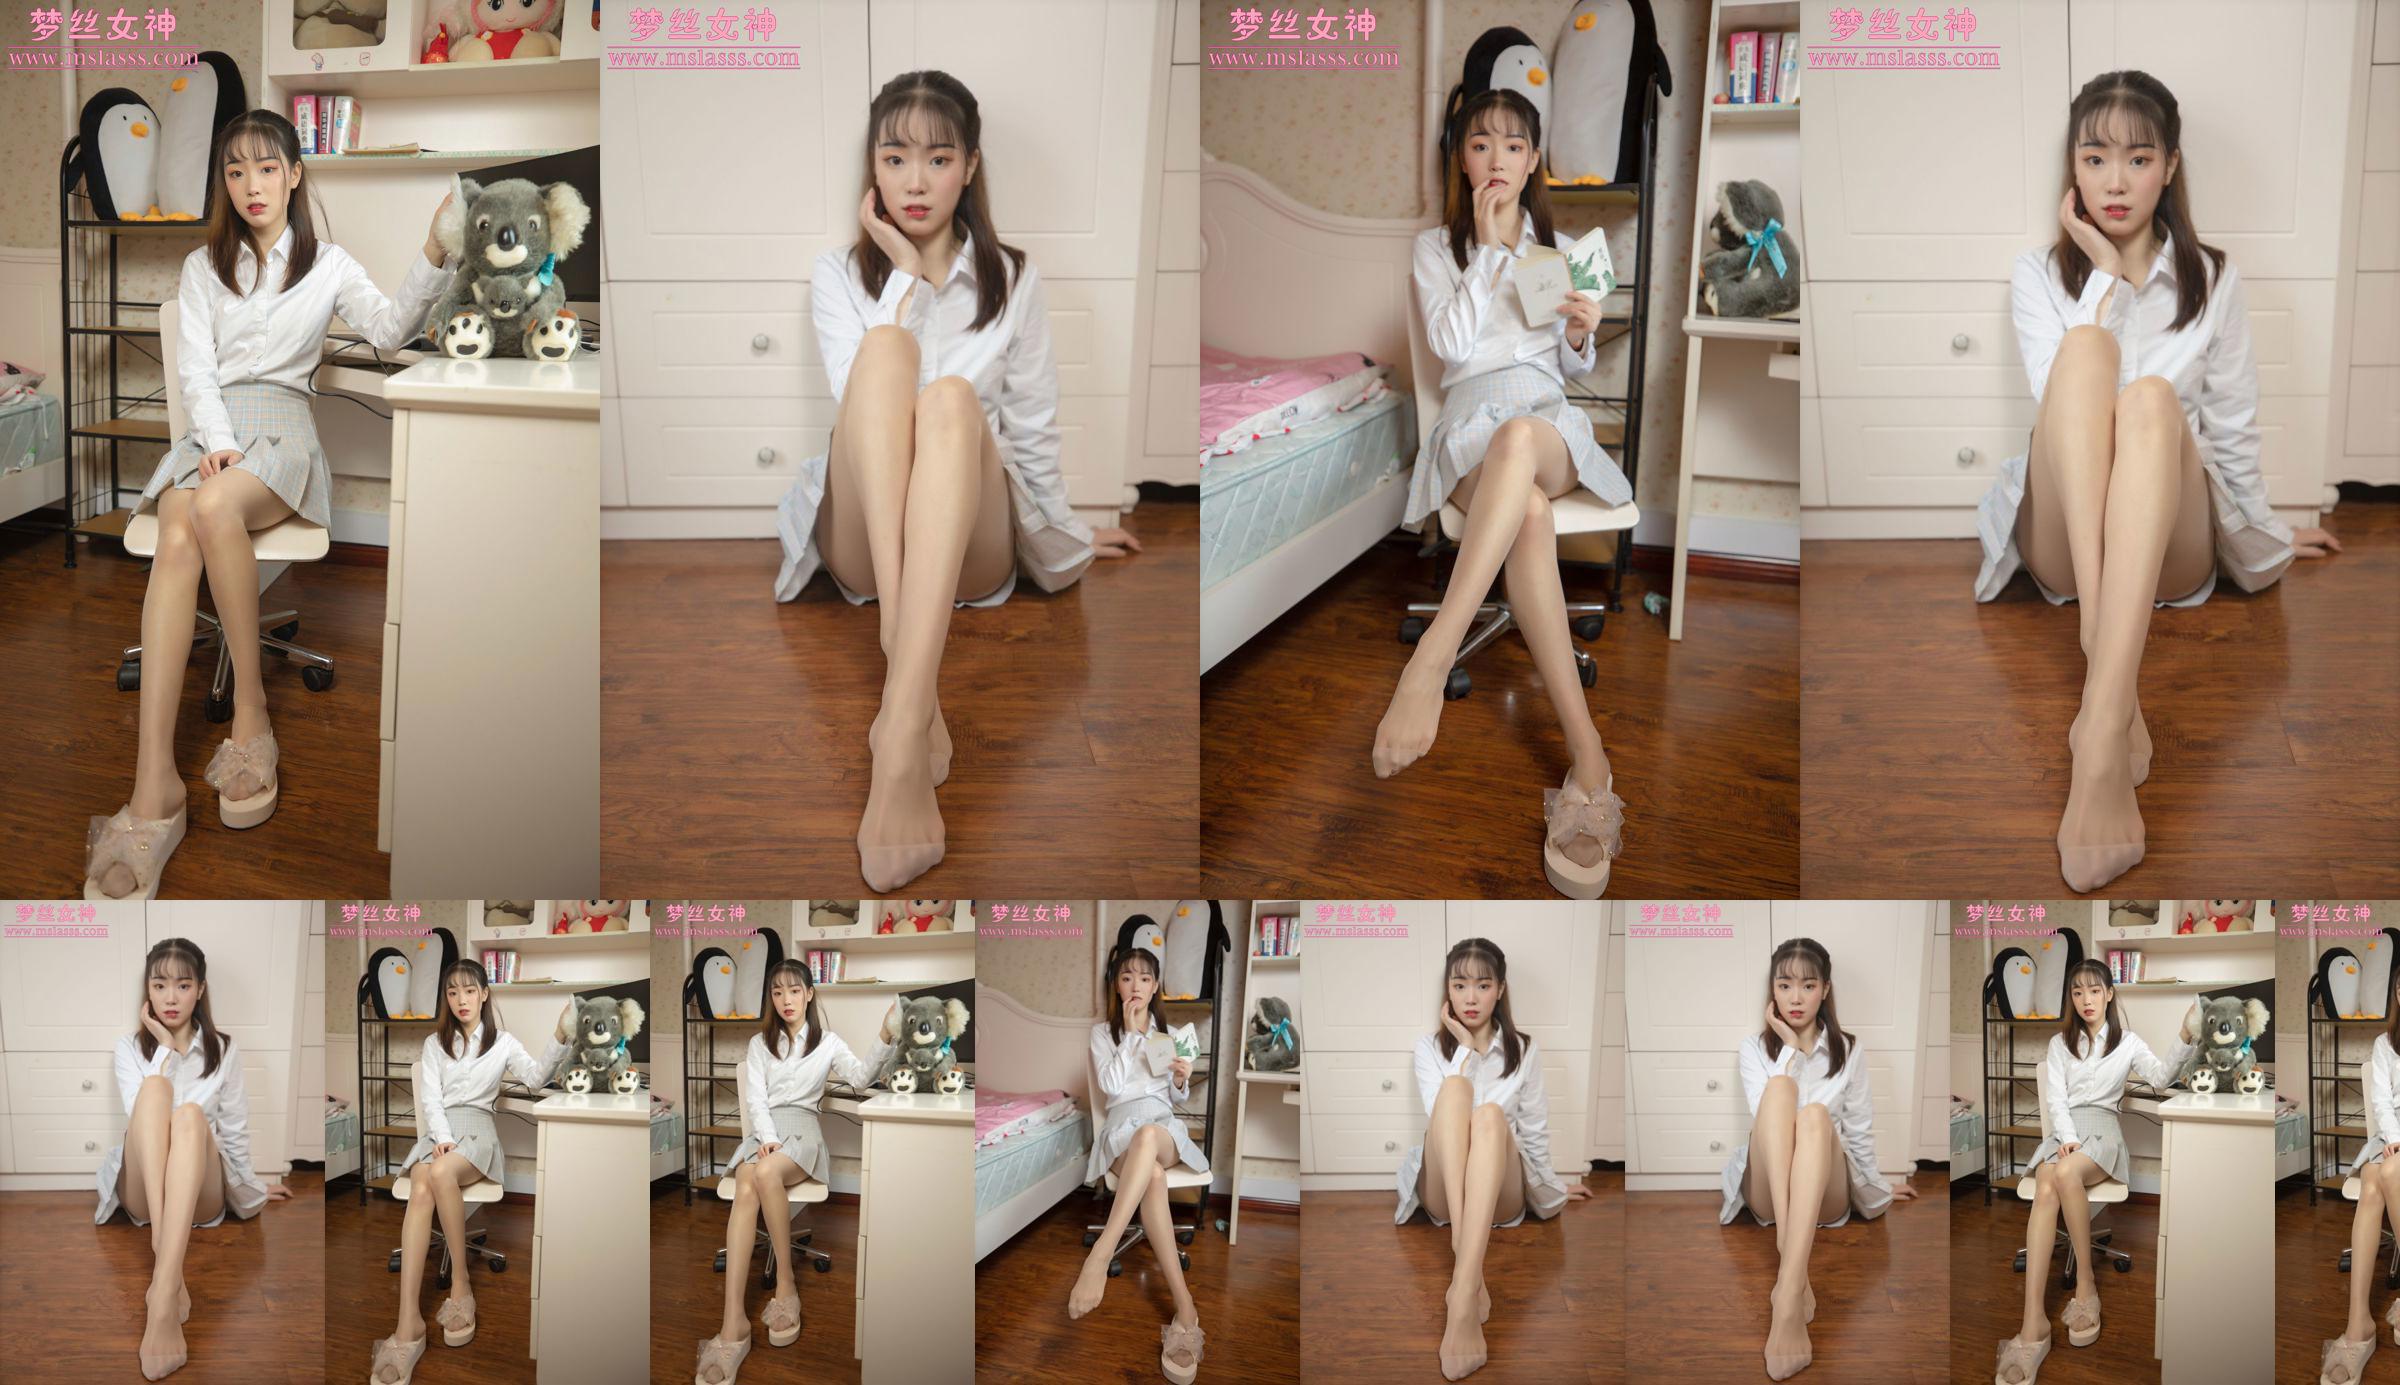 [MSLASS] Zhang Qiying new model goddess No.8b2c4e Page 4